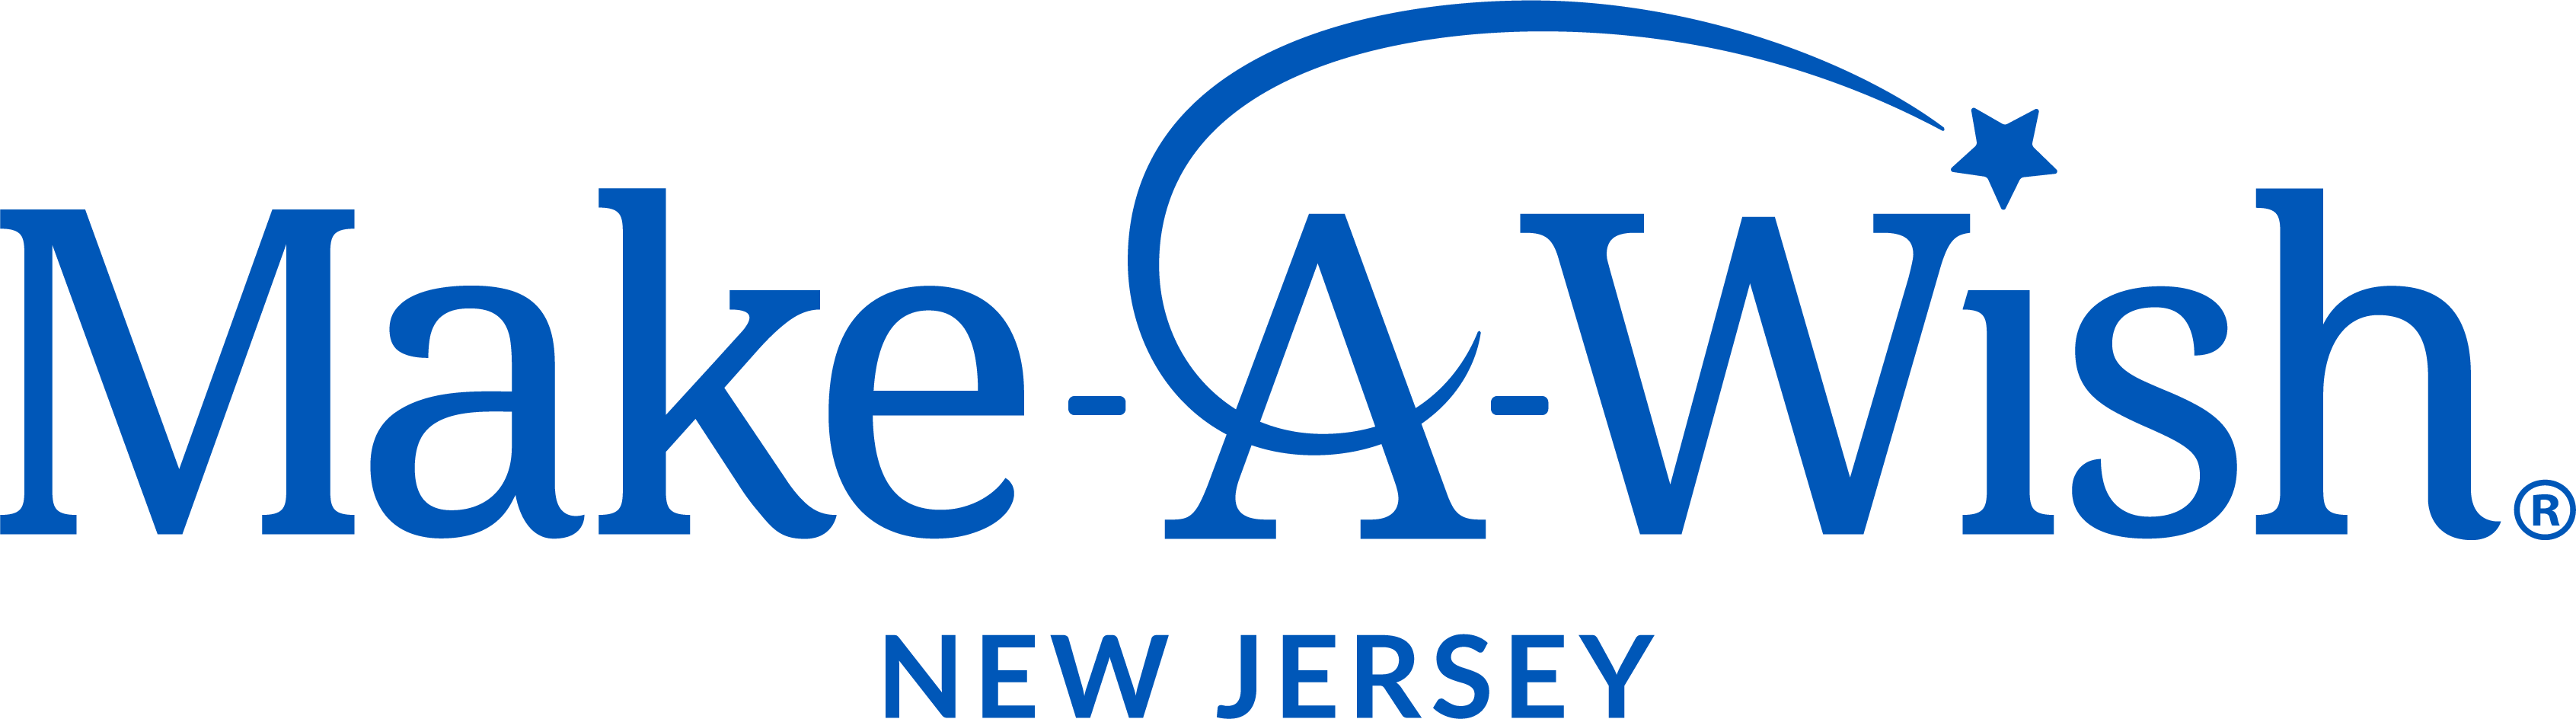 Make-A-Wish NJ logo